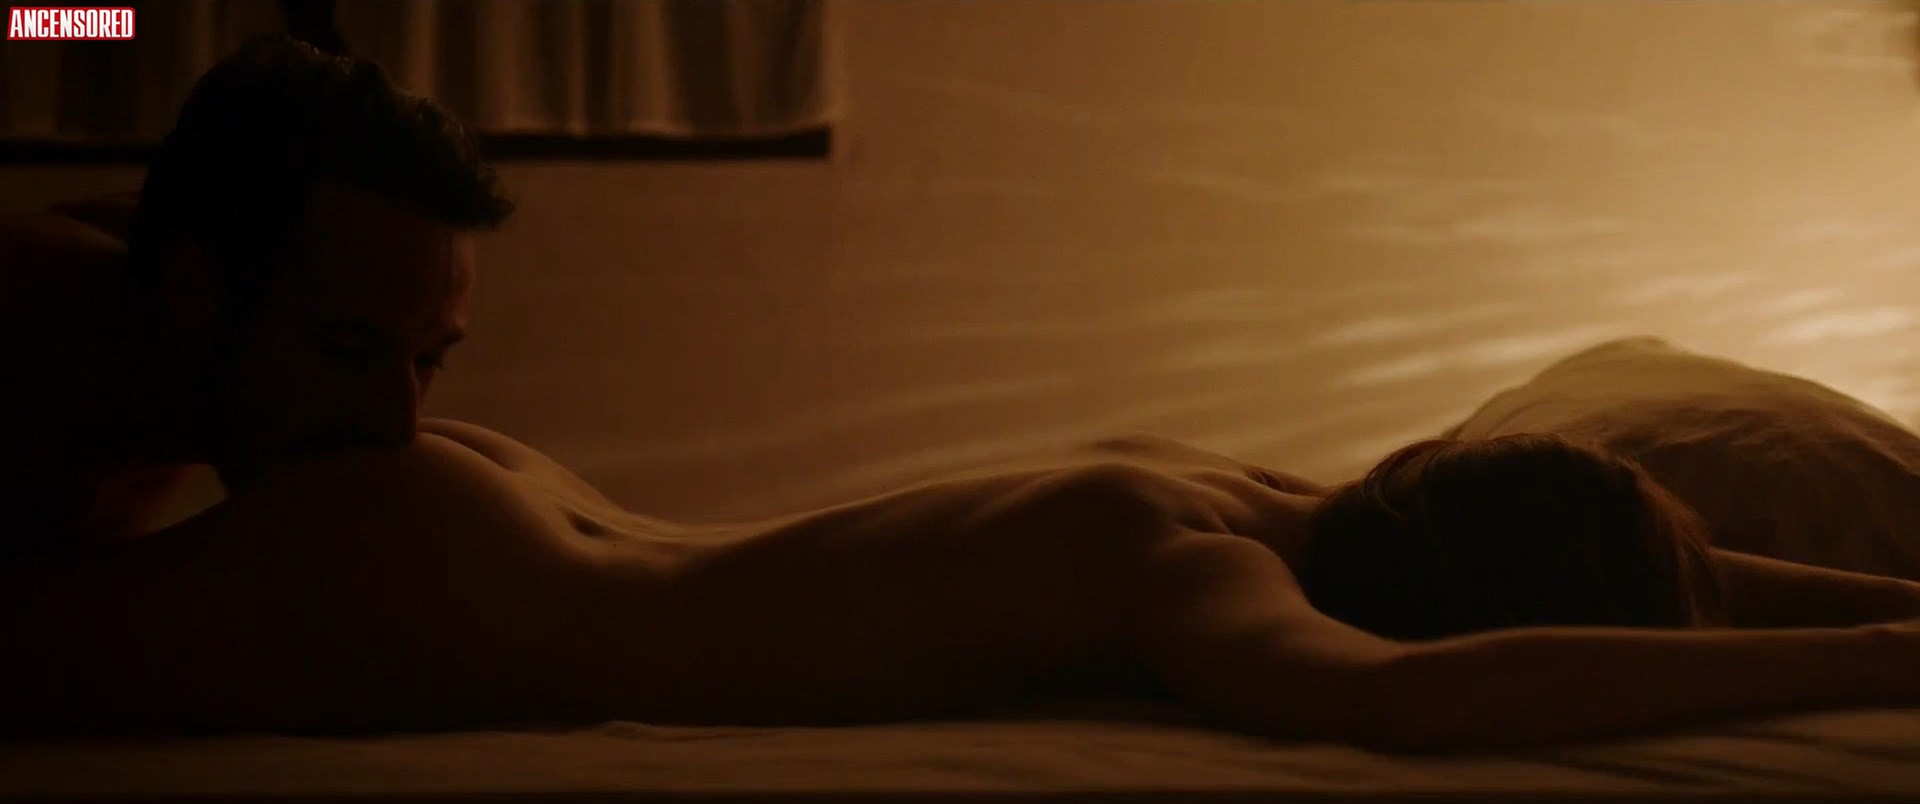 Ana Girardot nude pics.